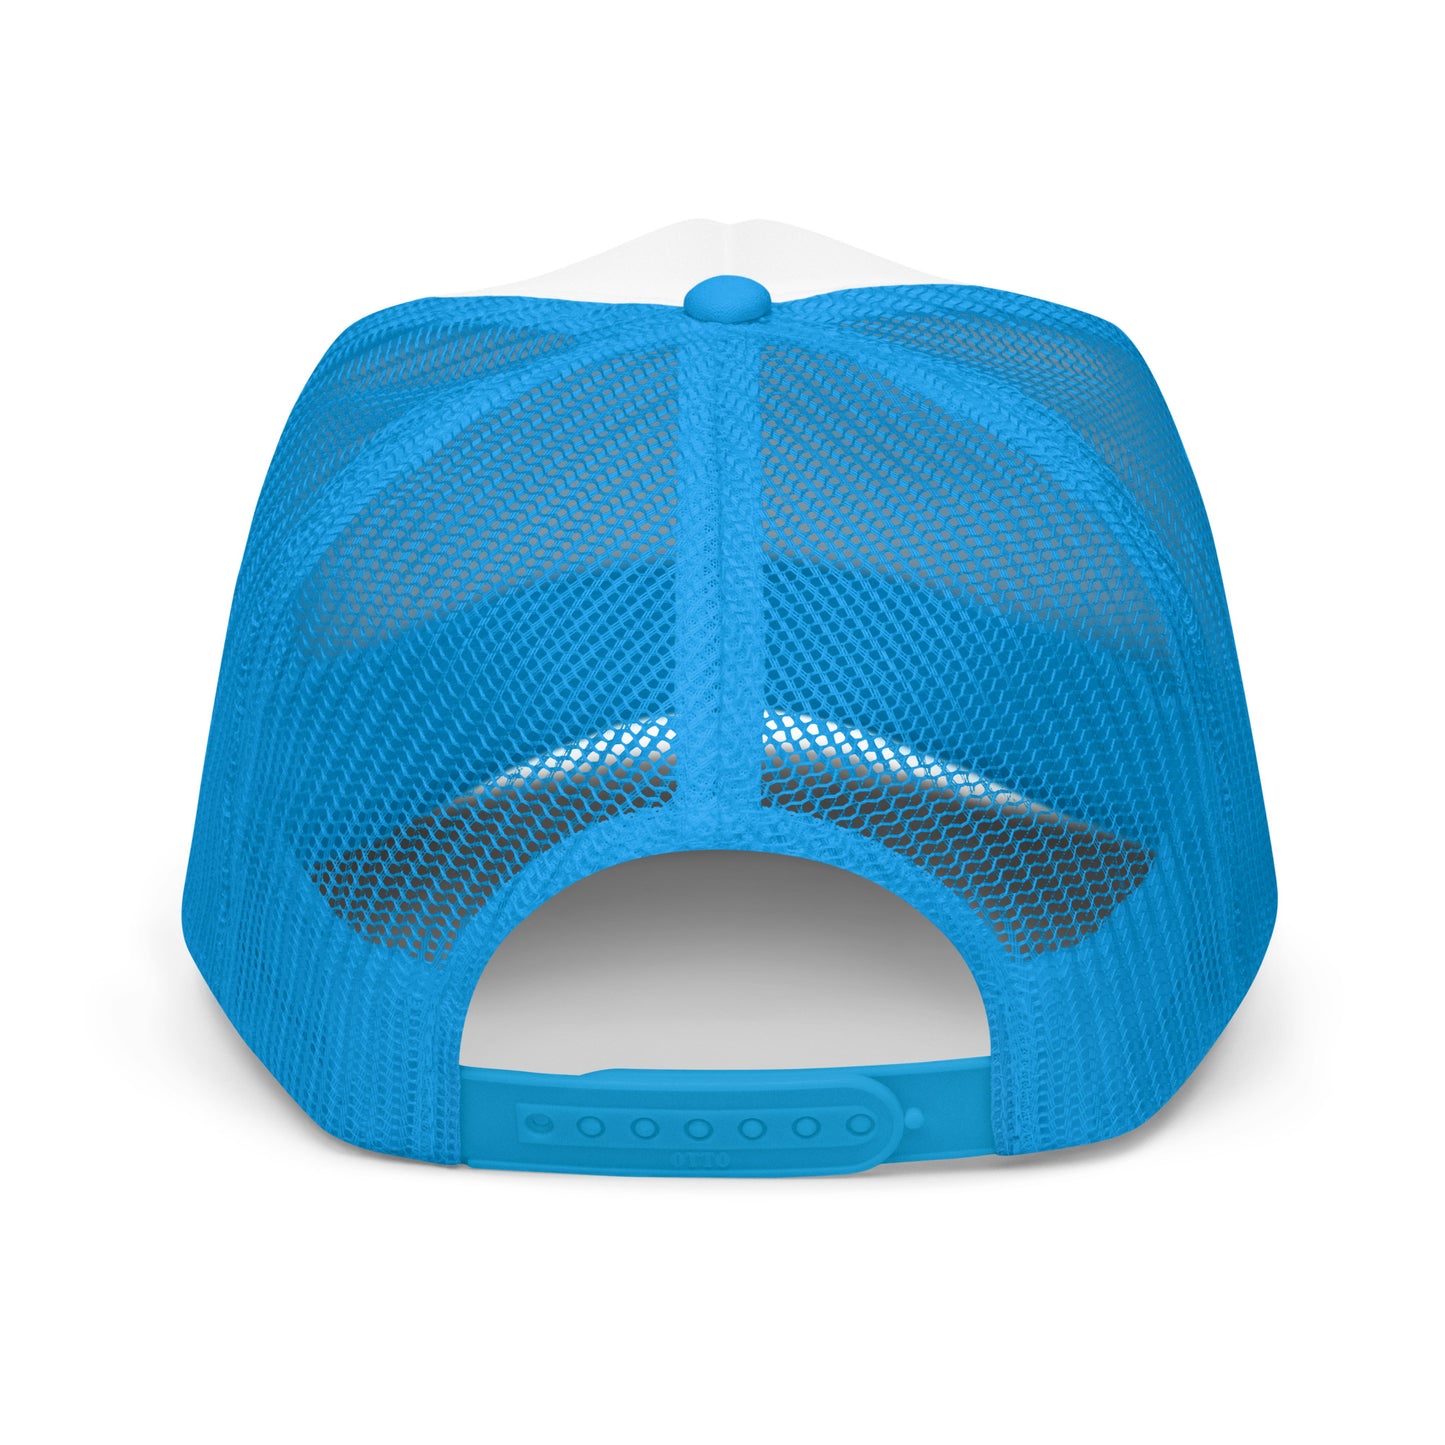 Original Official Cat Lady blue design Foam trucker hat